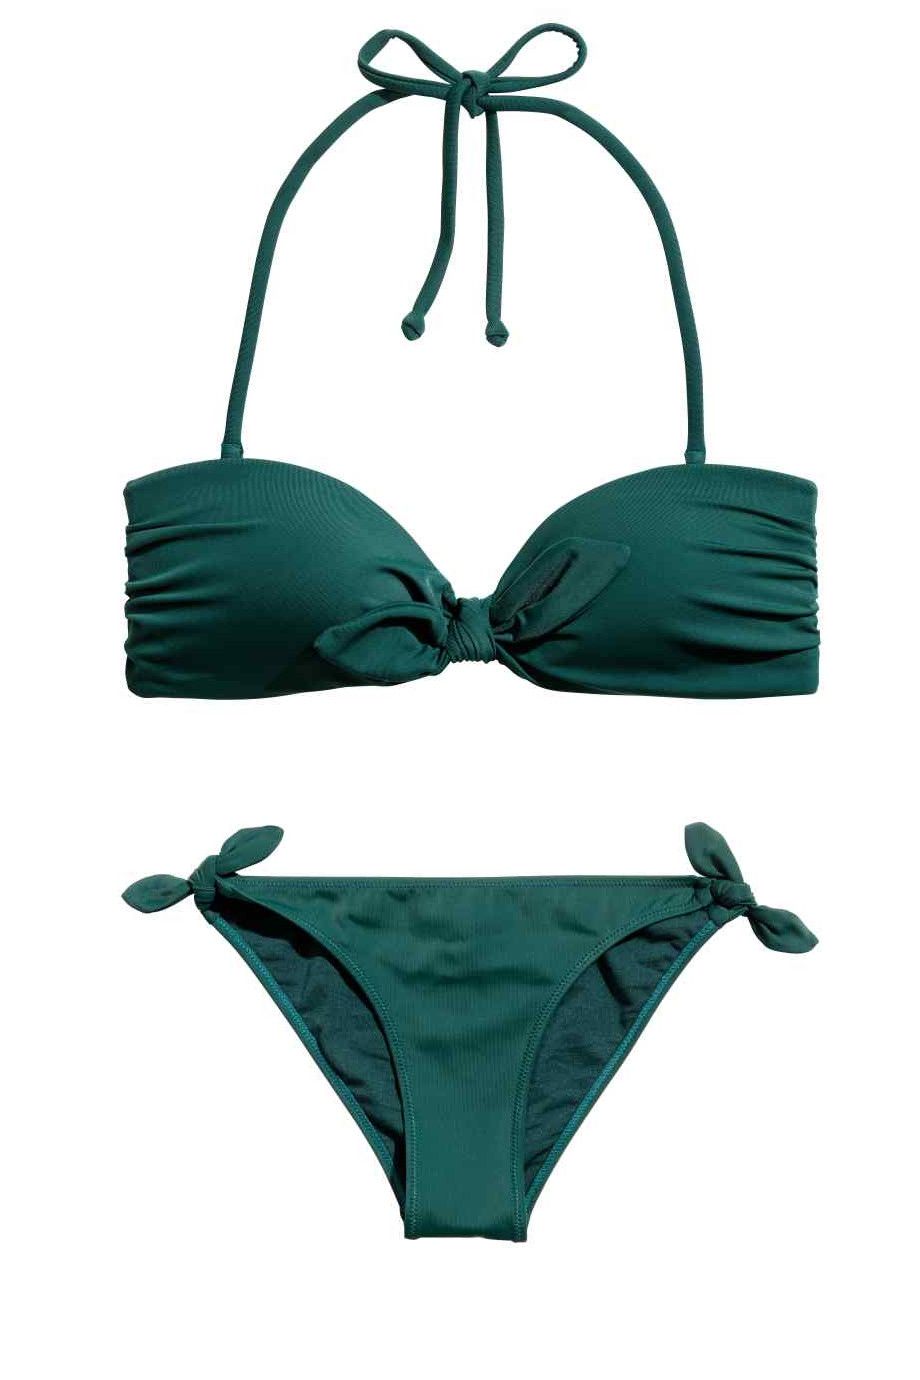 Bikini più belli estate 2017 come il due pezzi in verde di H&M